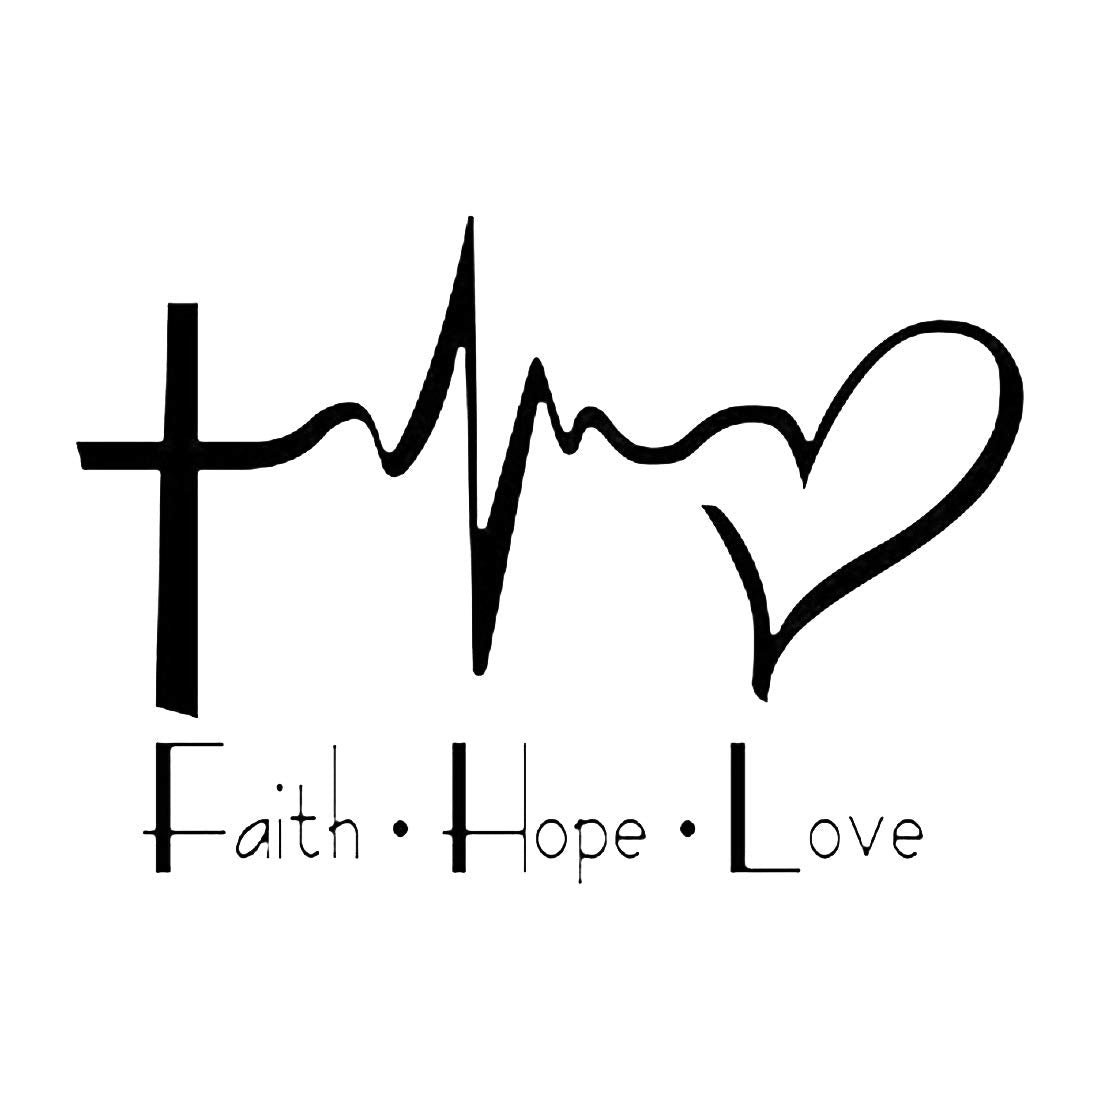 Faith hope love tattoo - From His Presence®